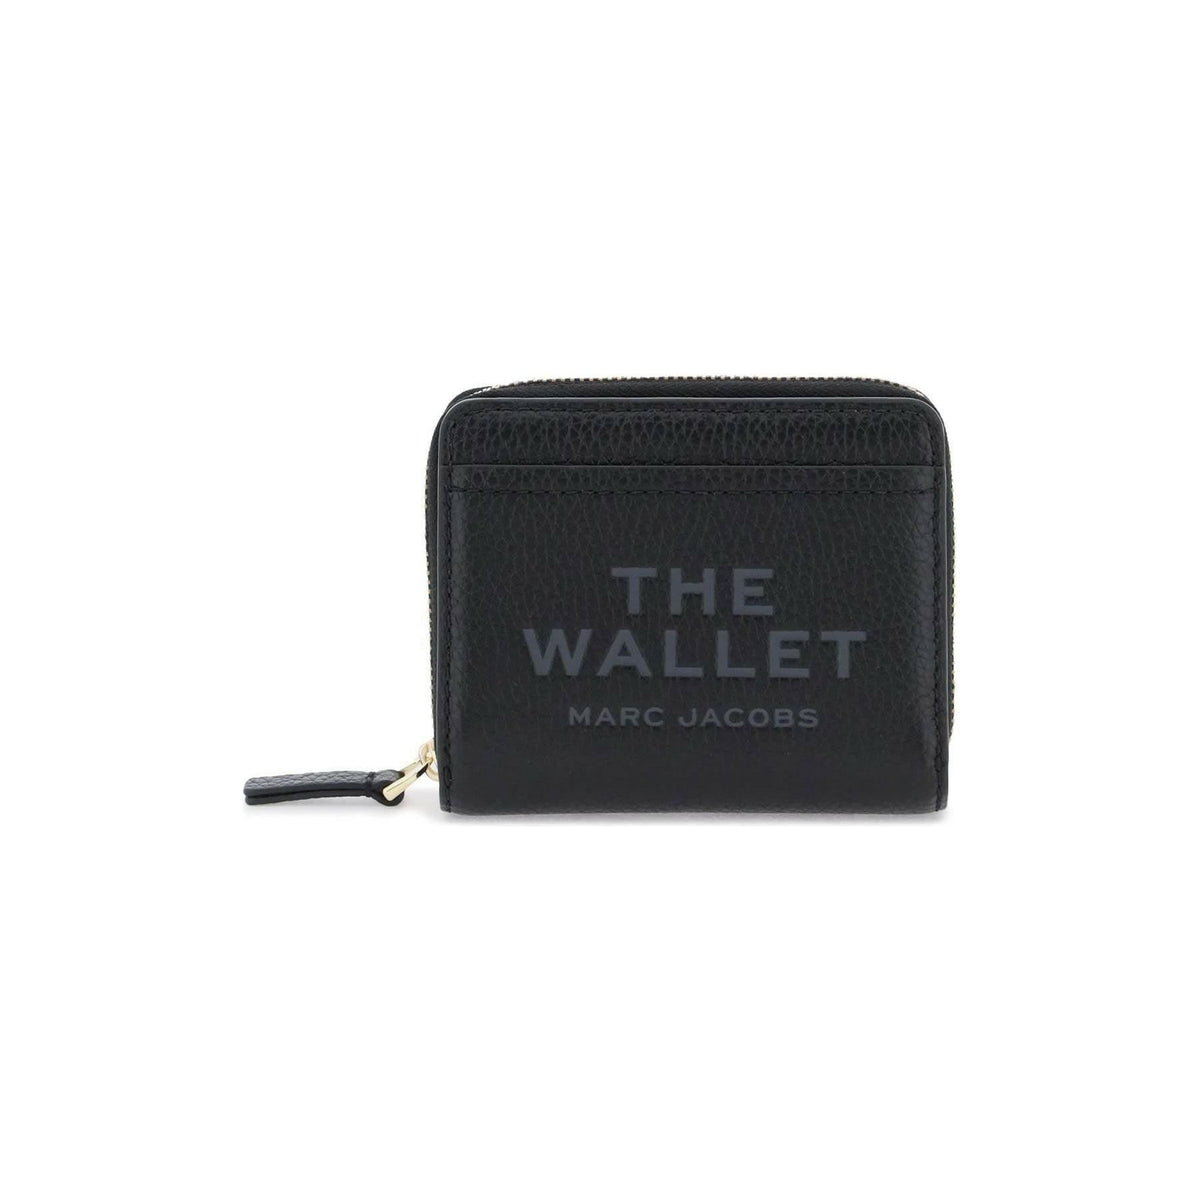 The Leather Mini Compact Wallet MARC JACOBS JOHN JULIA.